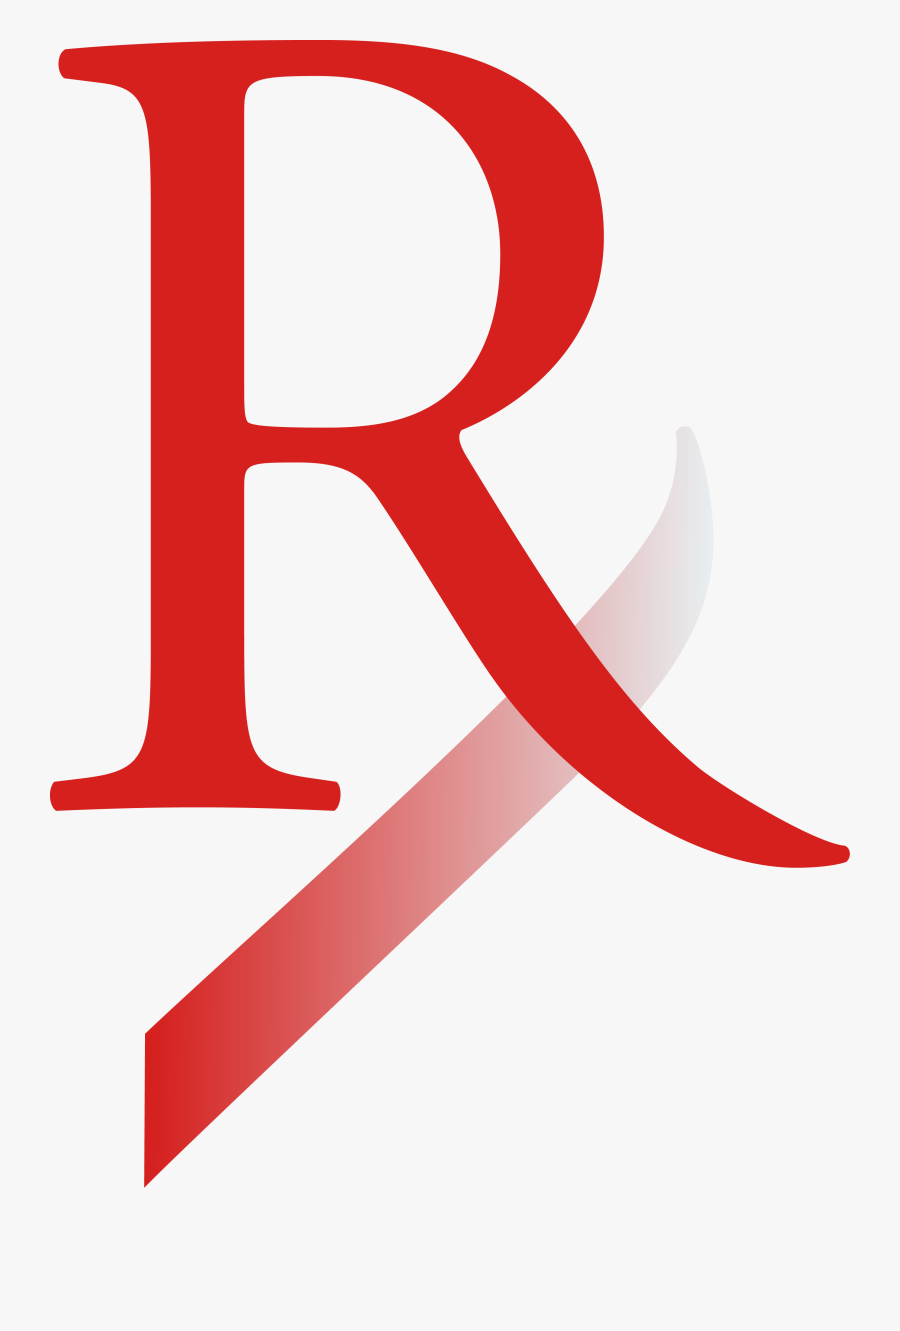 Rubicon Pharmacies As Pharmacists - Rubicon Pharmacies, Transparent Clipart